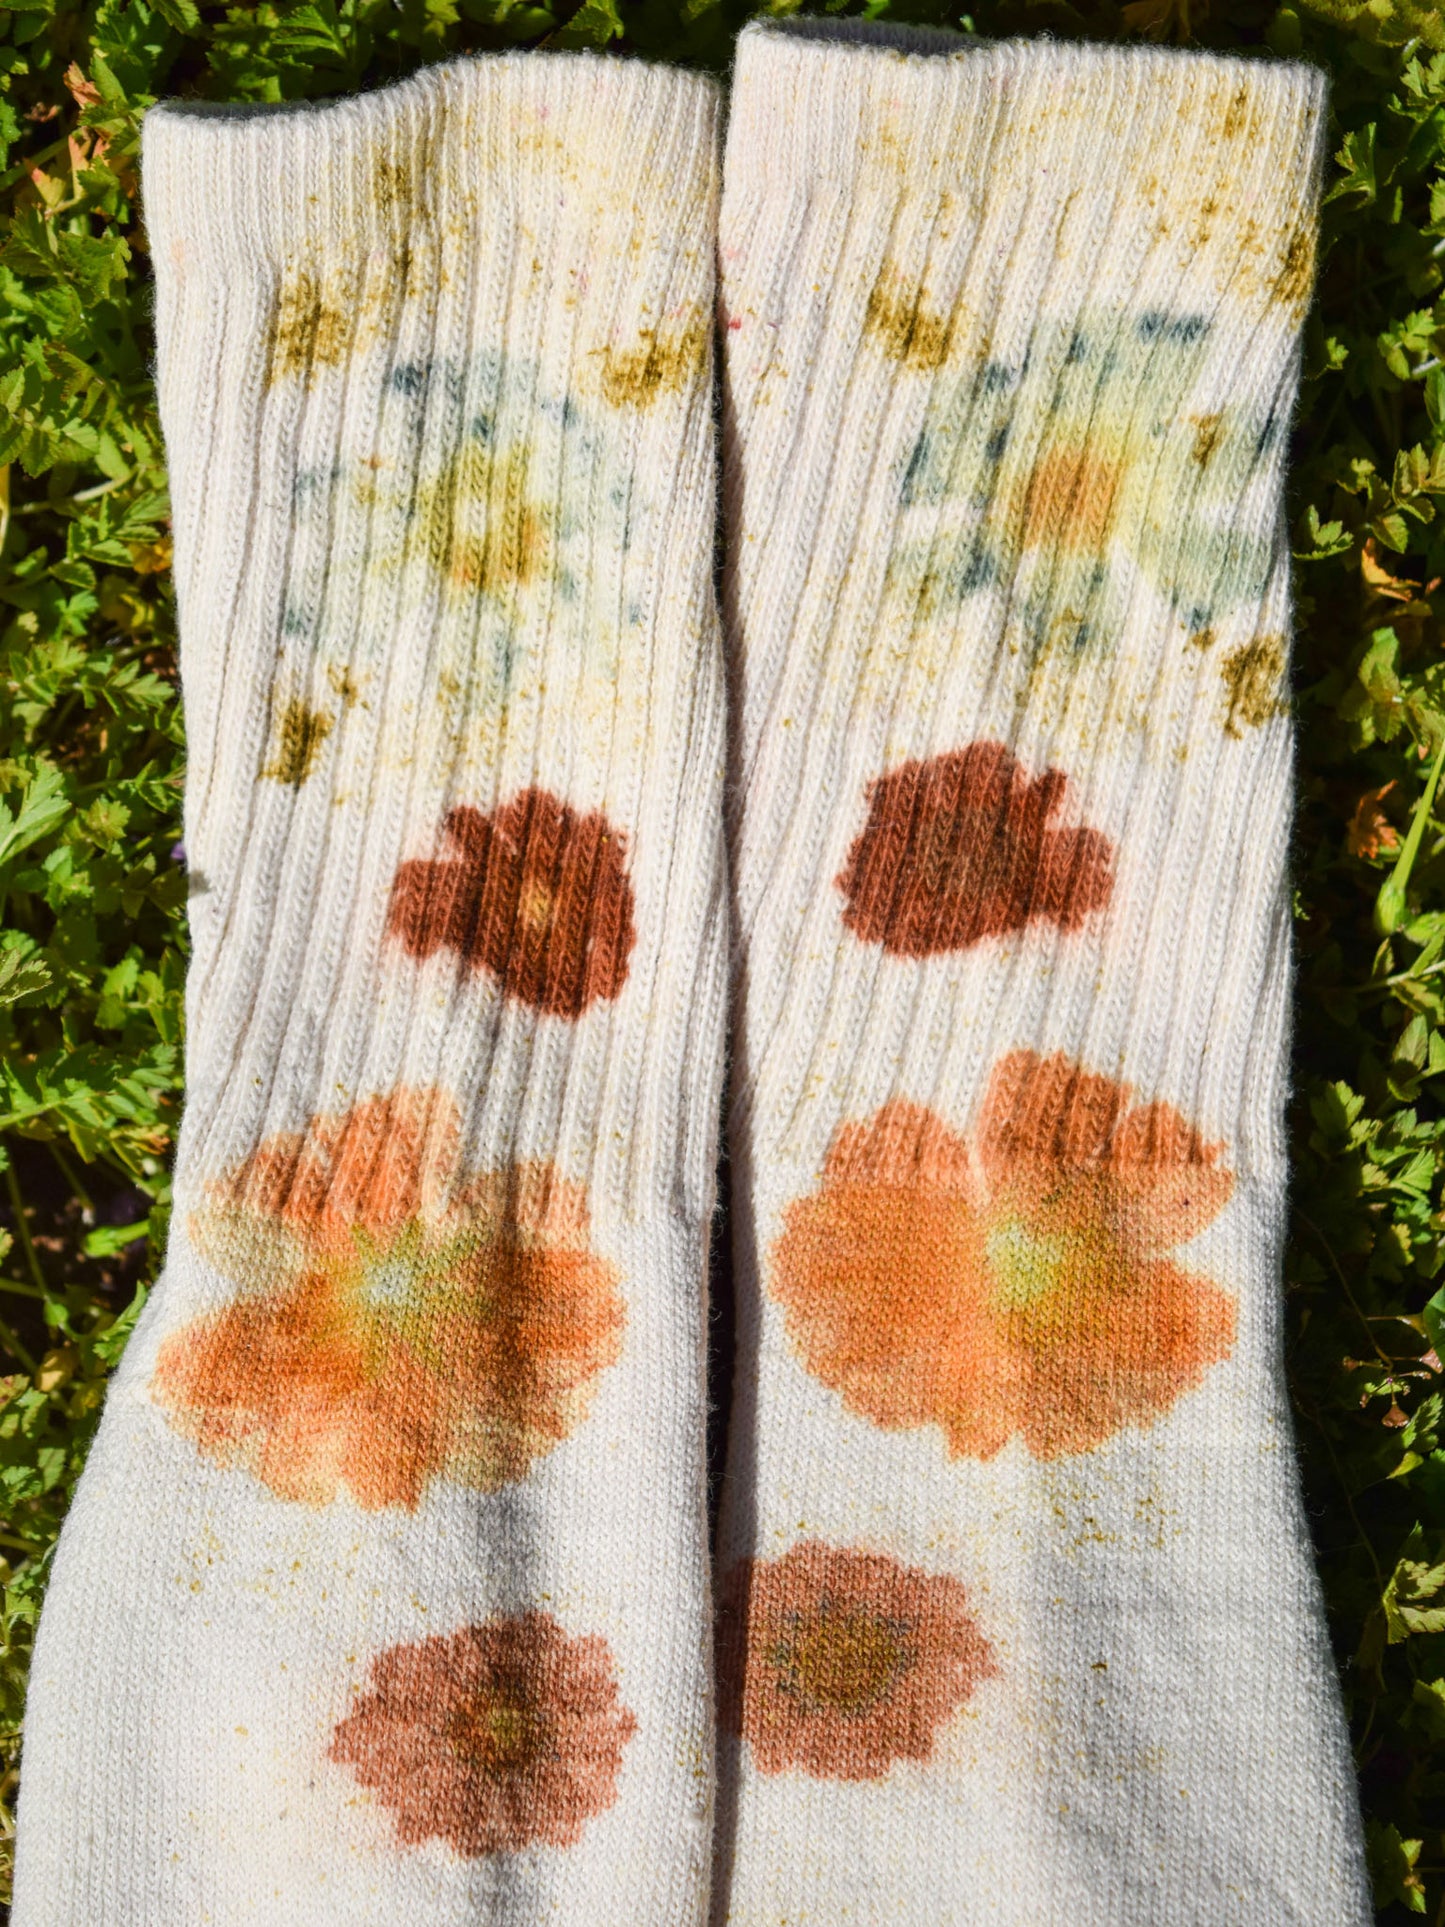 Garden Socks in Speckled Marigold